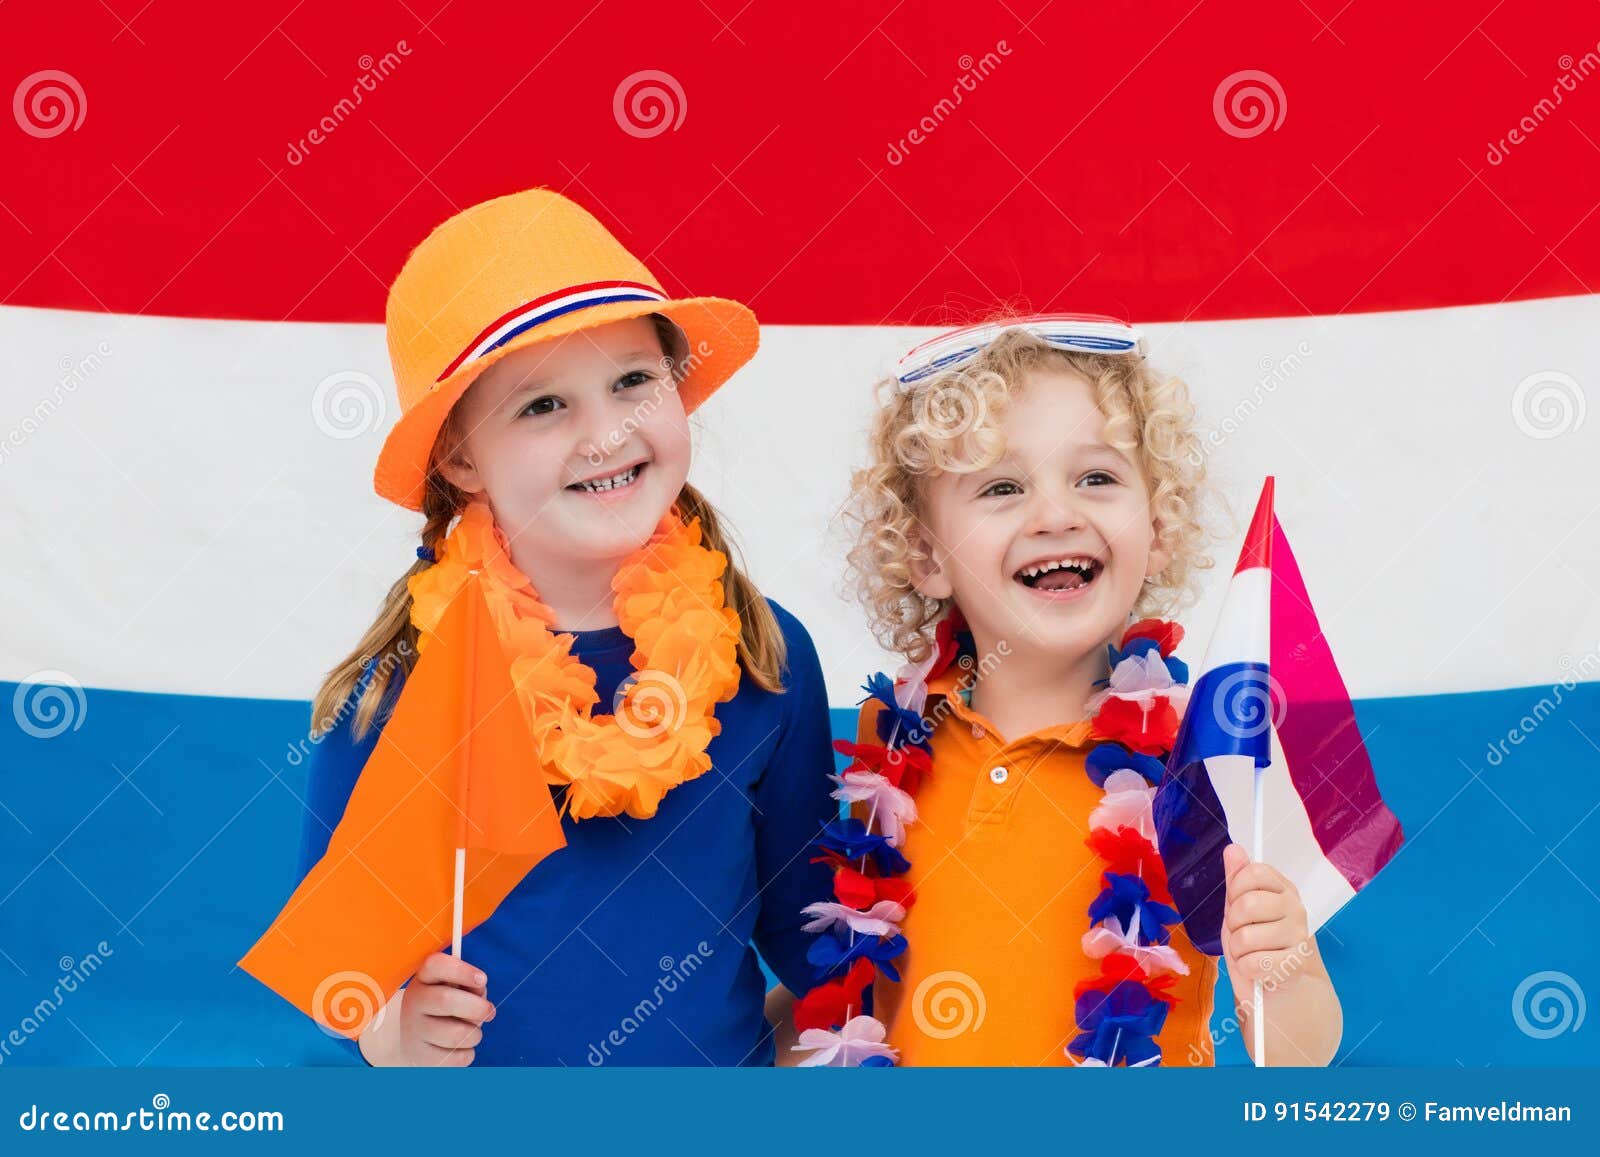 Dutch Kids. Children with Flag of Netherlands. Holland Fans Stock Image ...